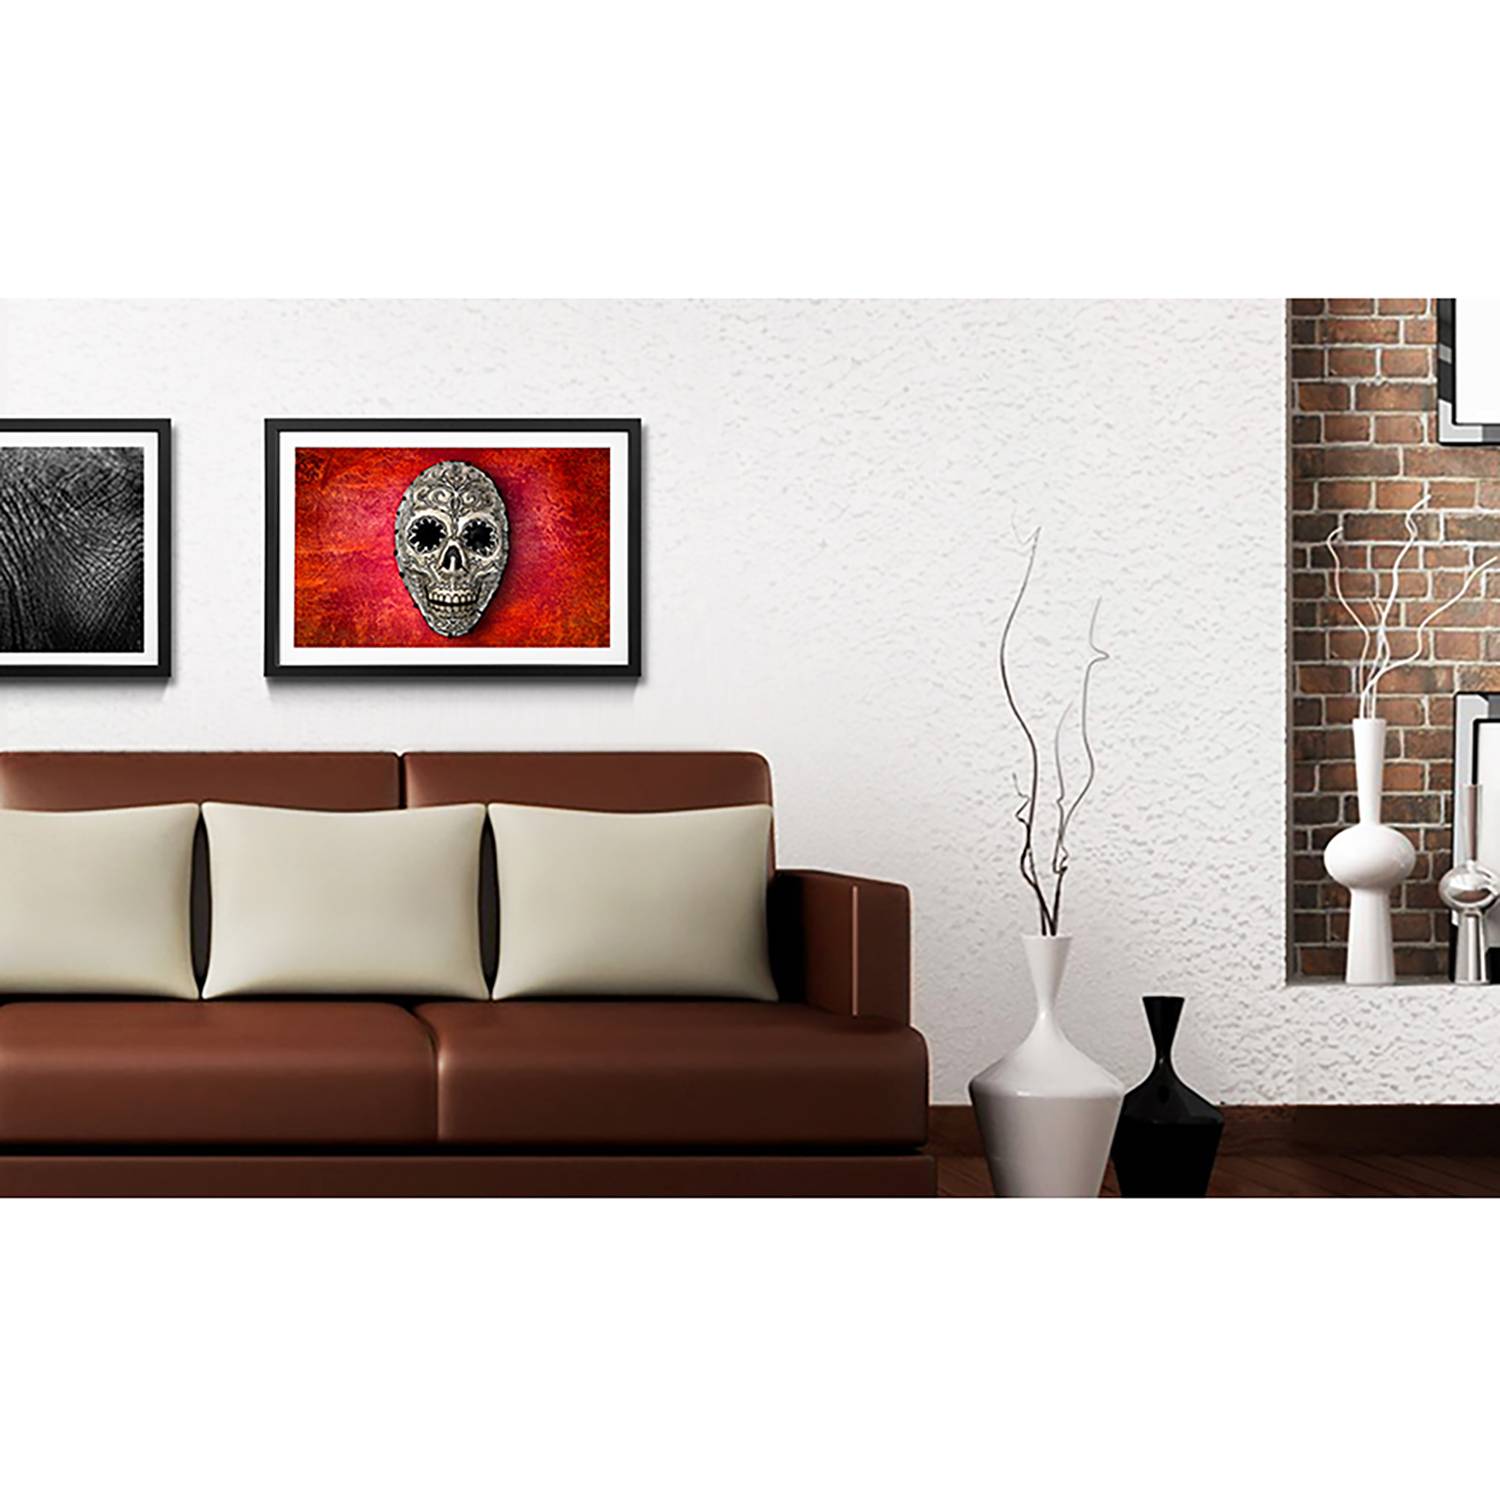 Bild Skull On Red von WandbilderXXL